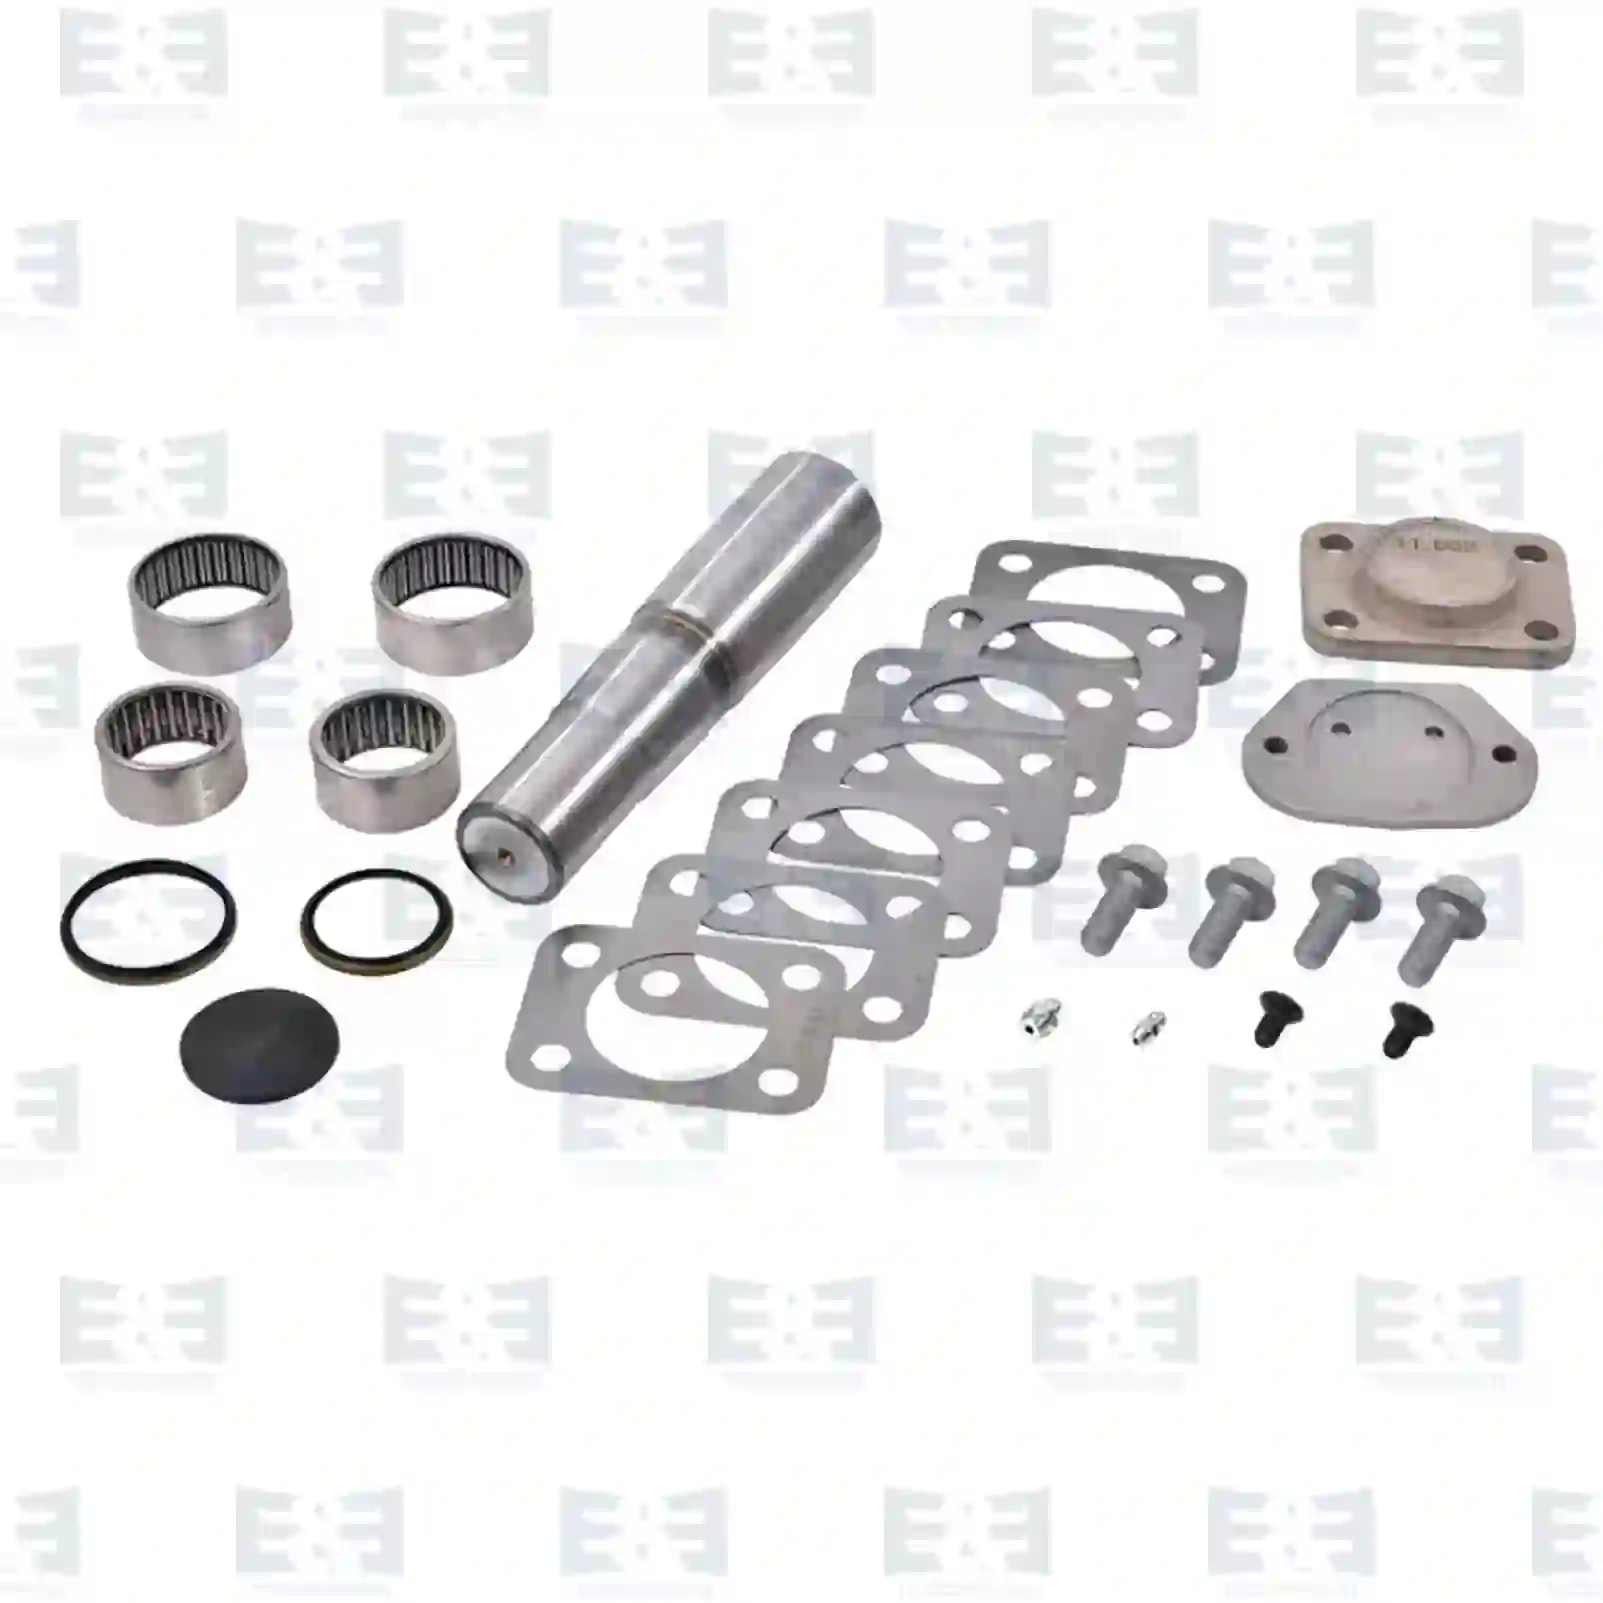  King pin kit, left || E&E Truck Spare Parts | Truck Spare Parts, Auotomotive Spare Parts